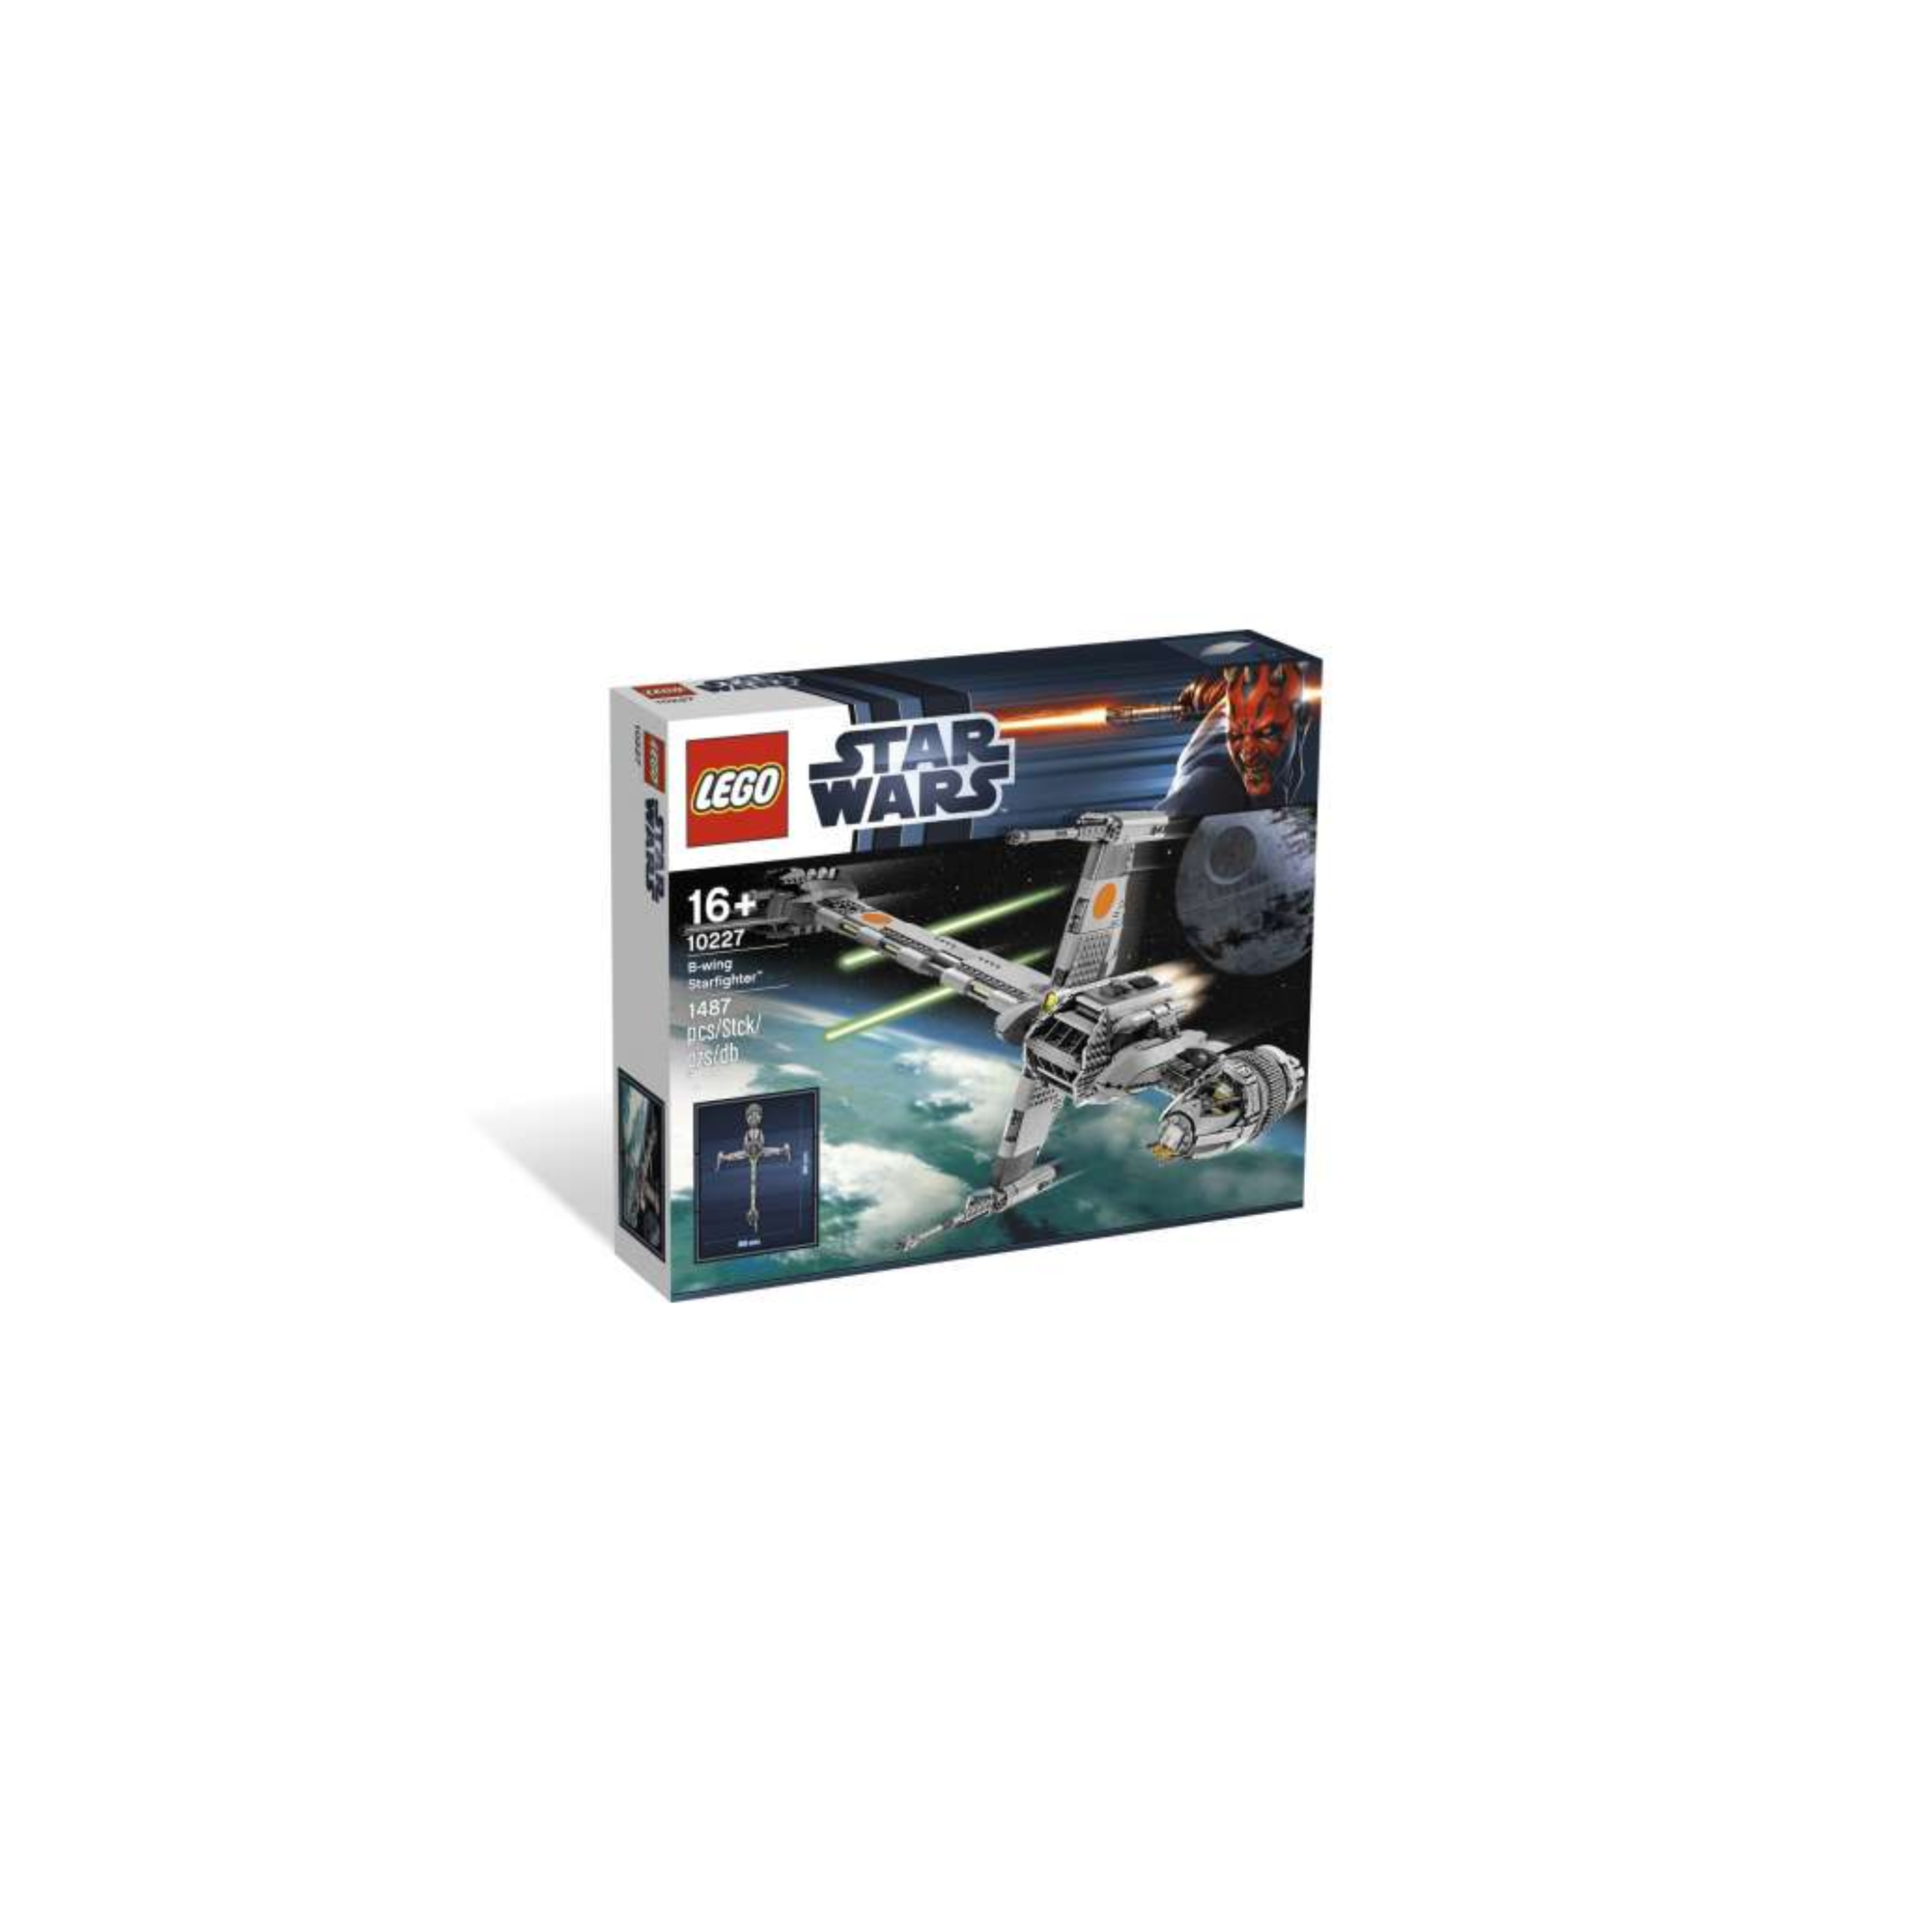 Star Wars Lego B-Wing Starfighter